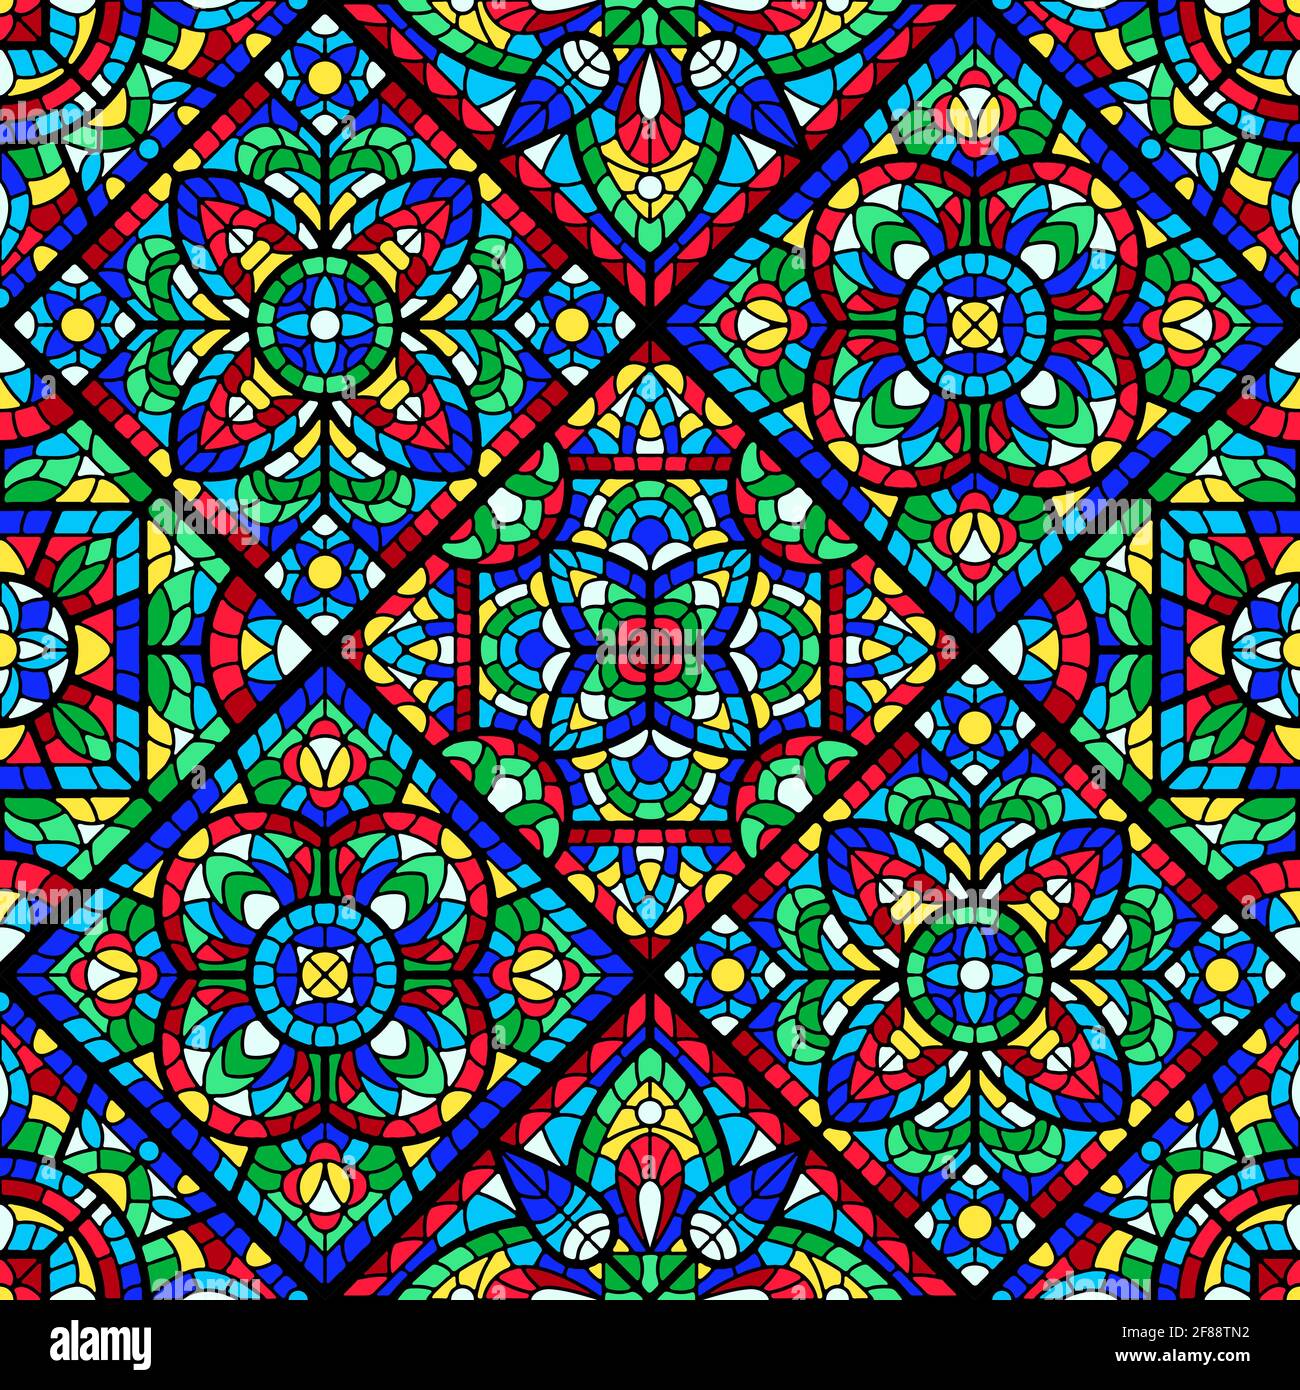 Buntglasfenster mit farbigem Stück. Dekoratives Mosaik-Fliesenmuster. Stock Vektor